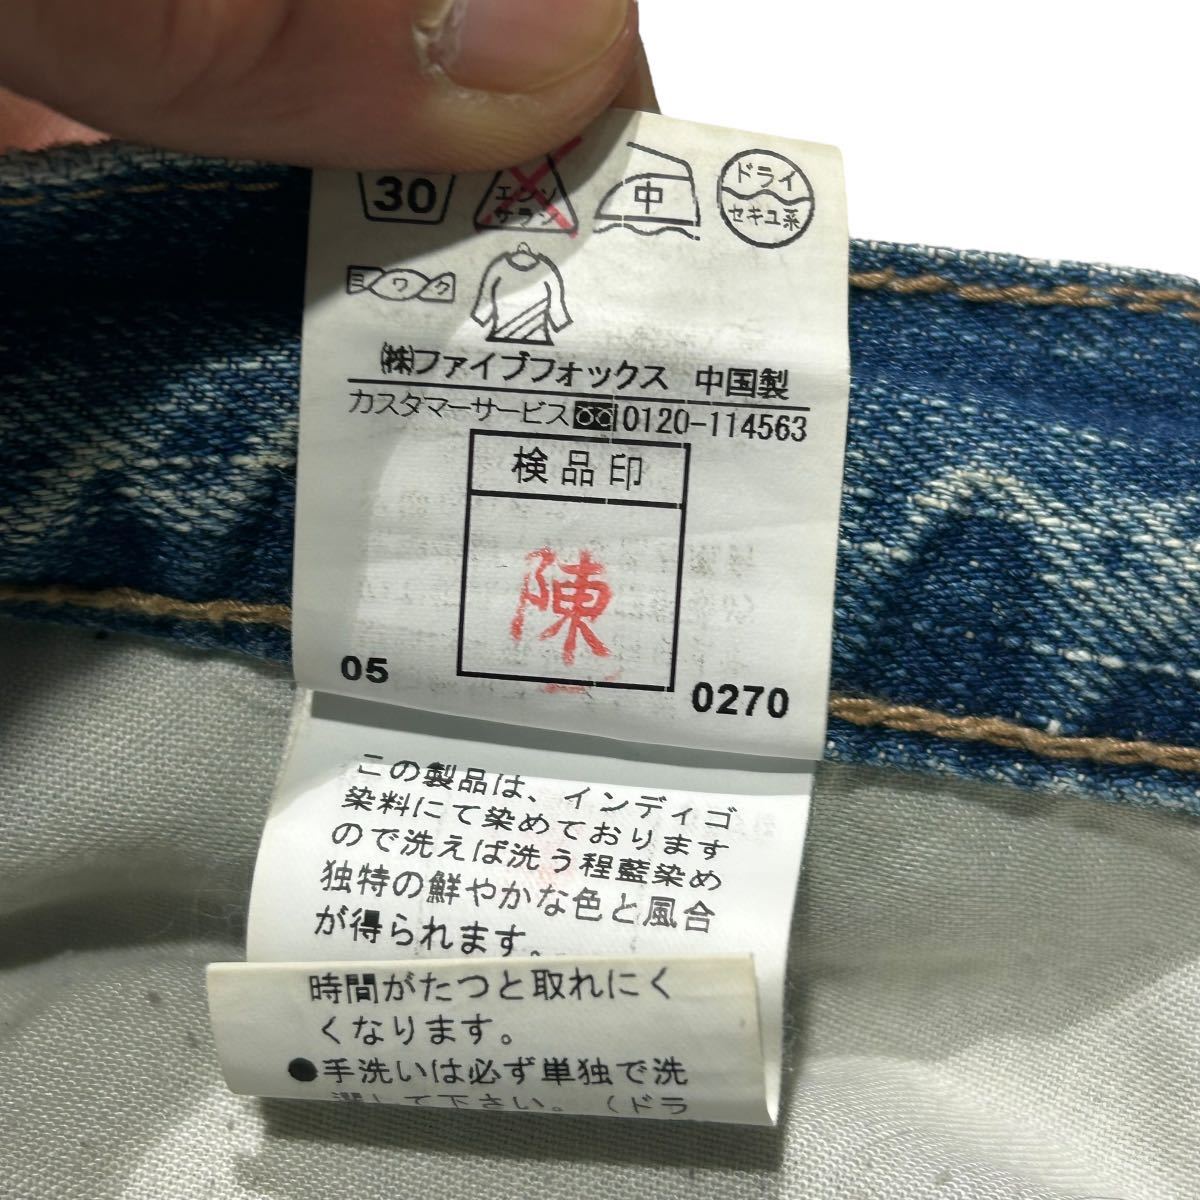 00s PPFM layerd denim trousers archive PEYTON PLACE FOR MEN collection design japan ピーピーエフエム jeans pants 90s rare _画像5